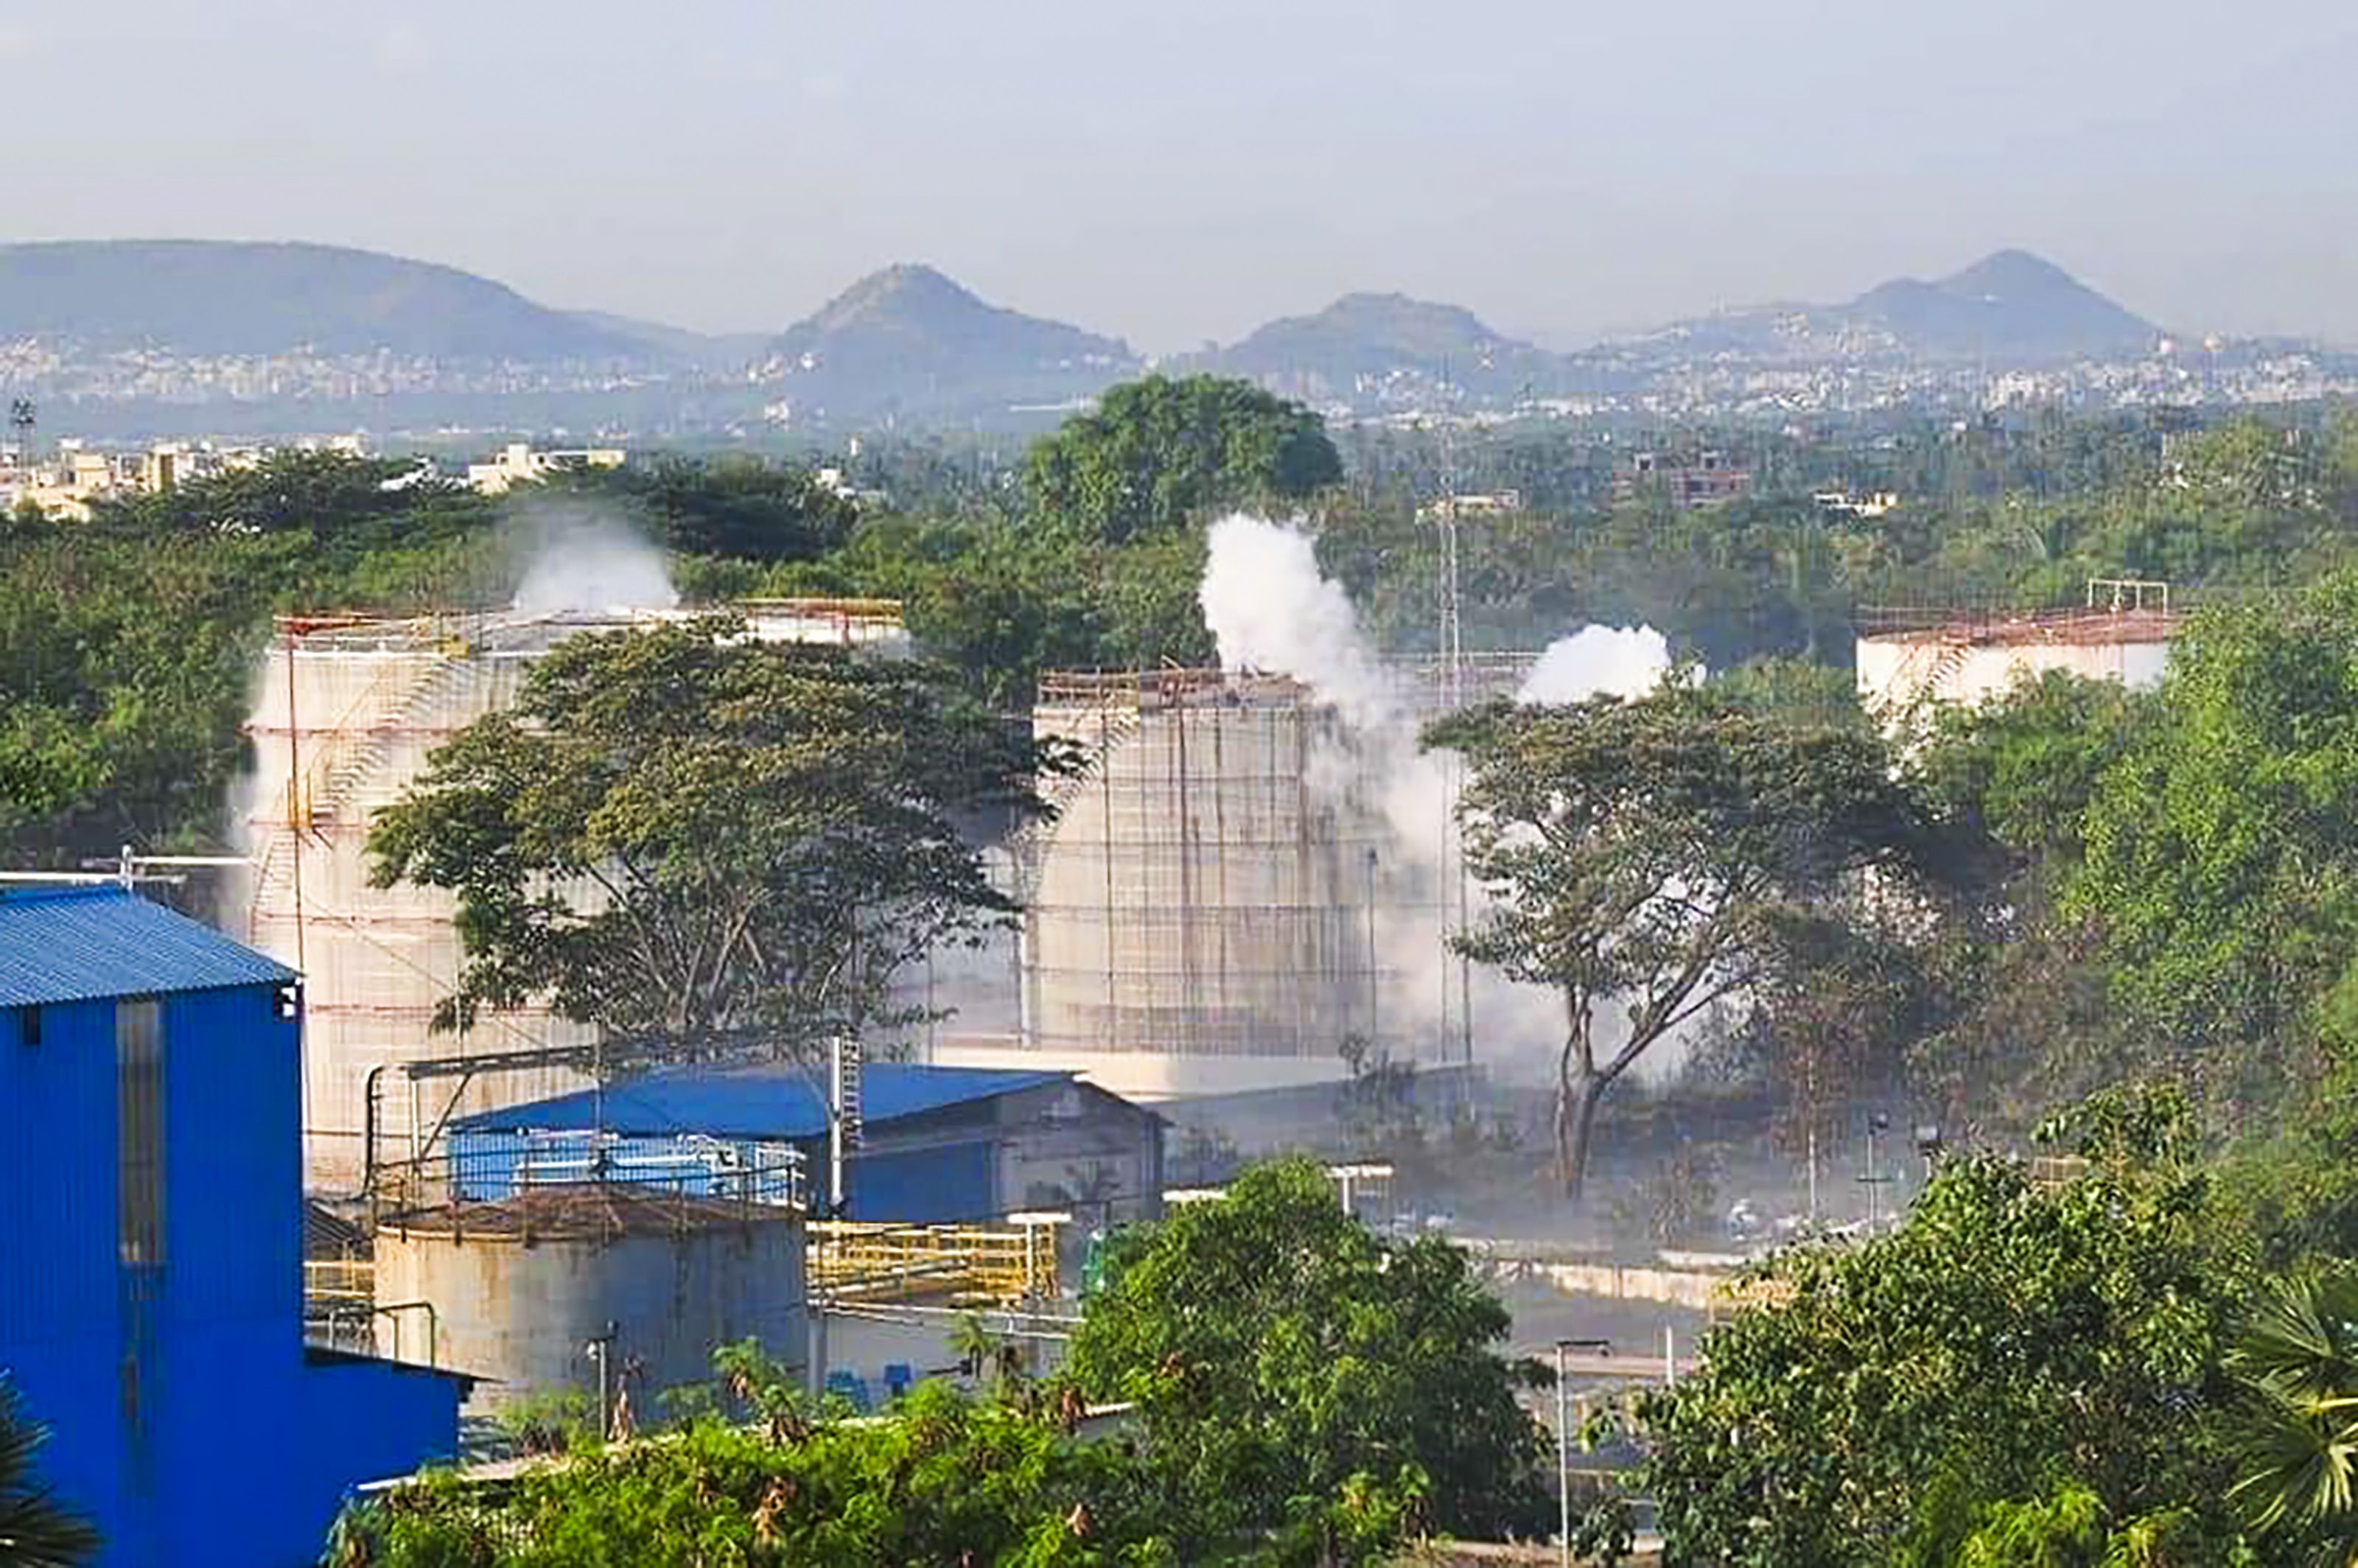 SUGAM - Wastewater Treatment Company in India